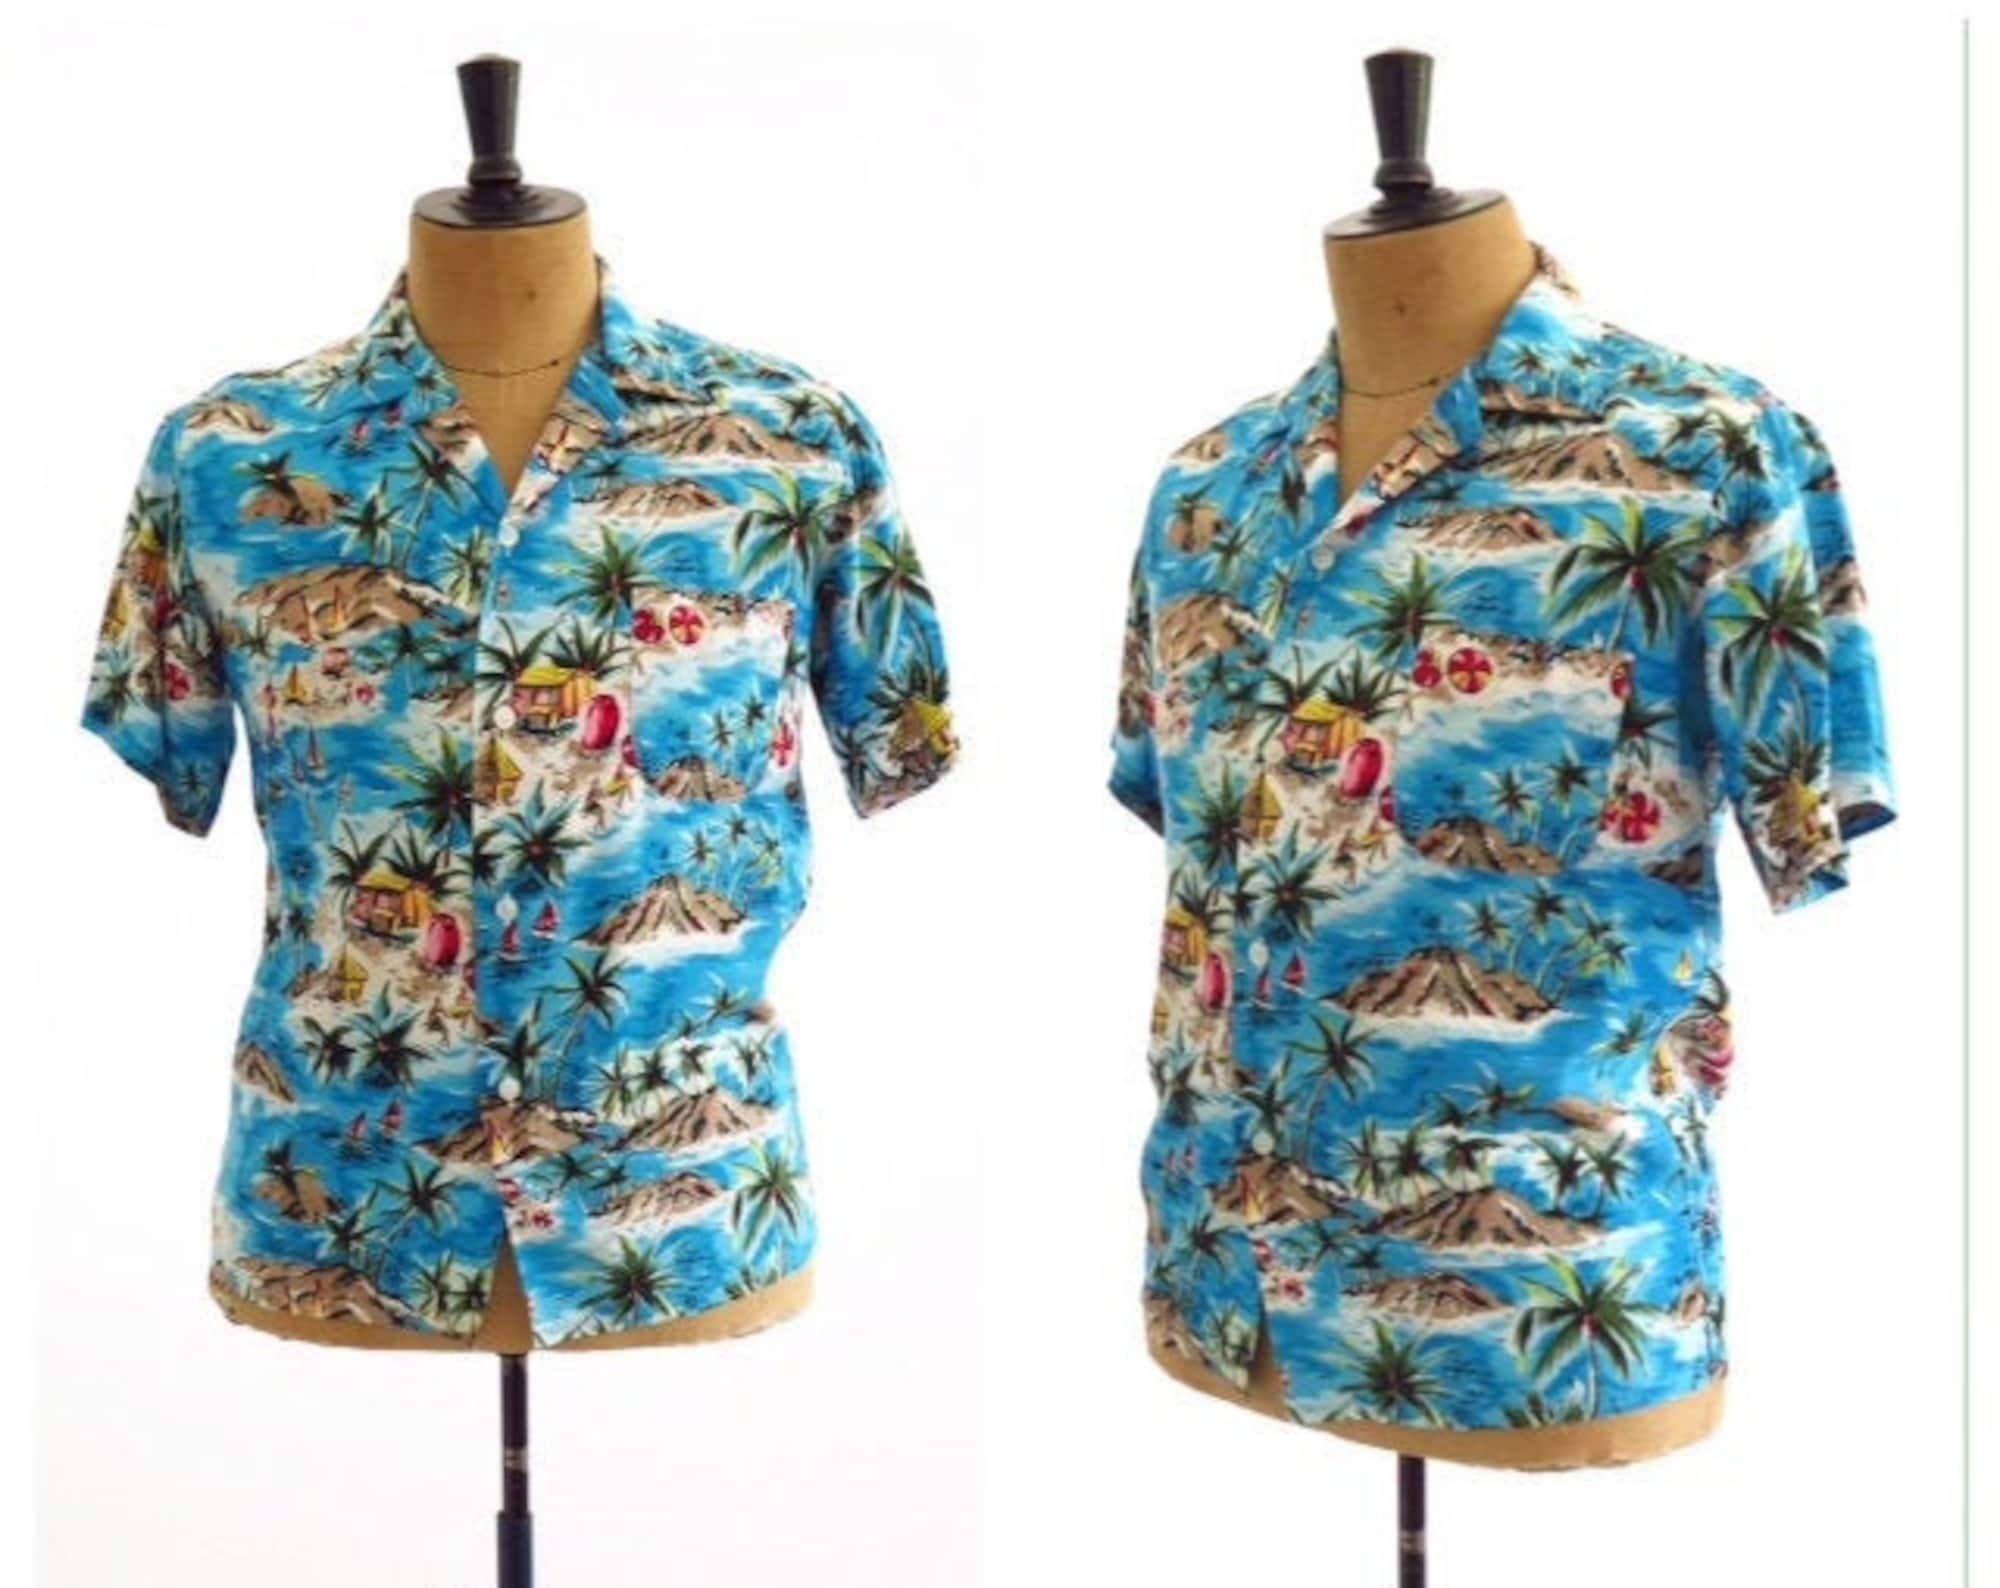 Discover RARE Original Vintage 1950s Aloha Shirts Rayon Hawaiian